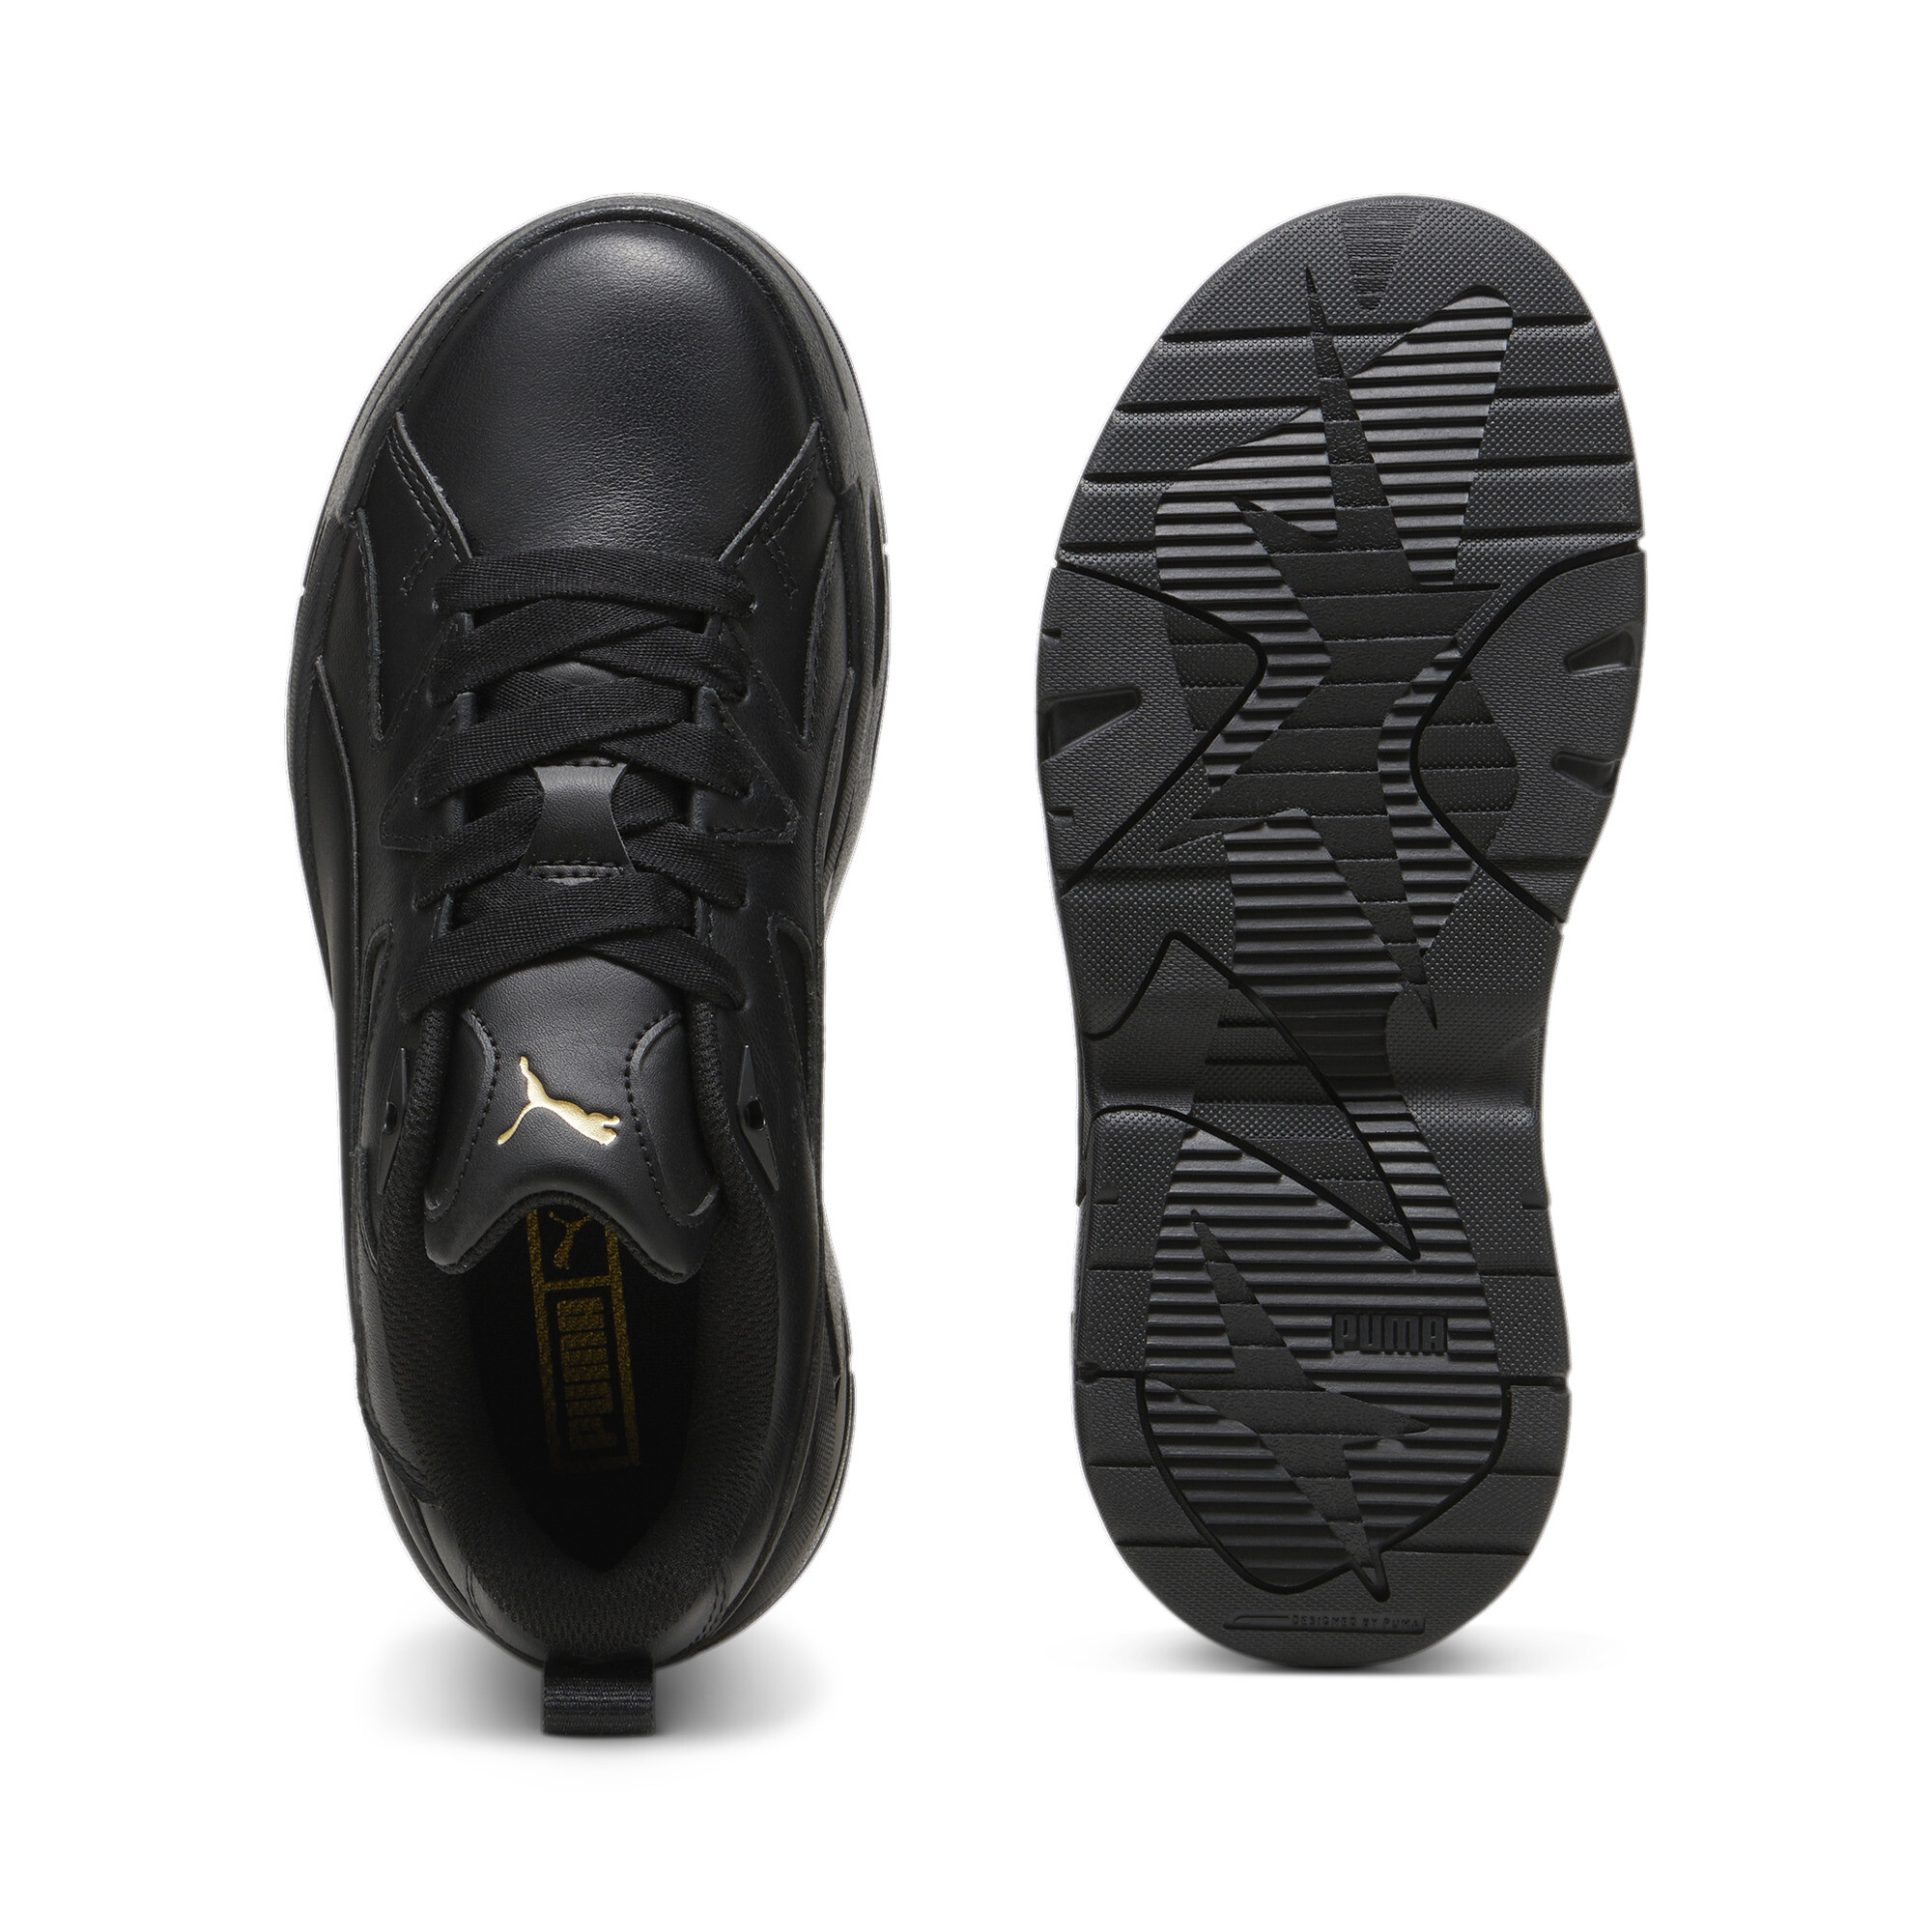 Women's Puma BLSTR Dresscode's Sneakers, Black, Size 35.5, Shoes